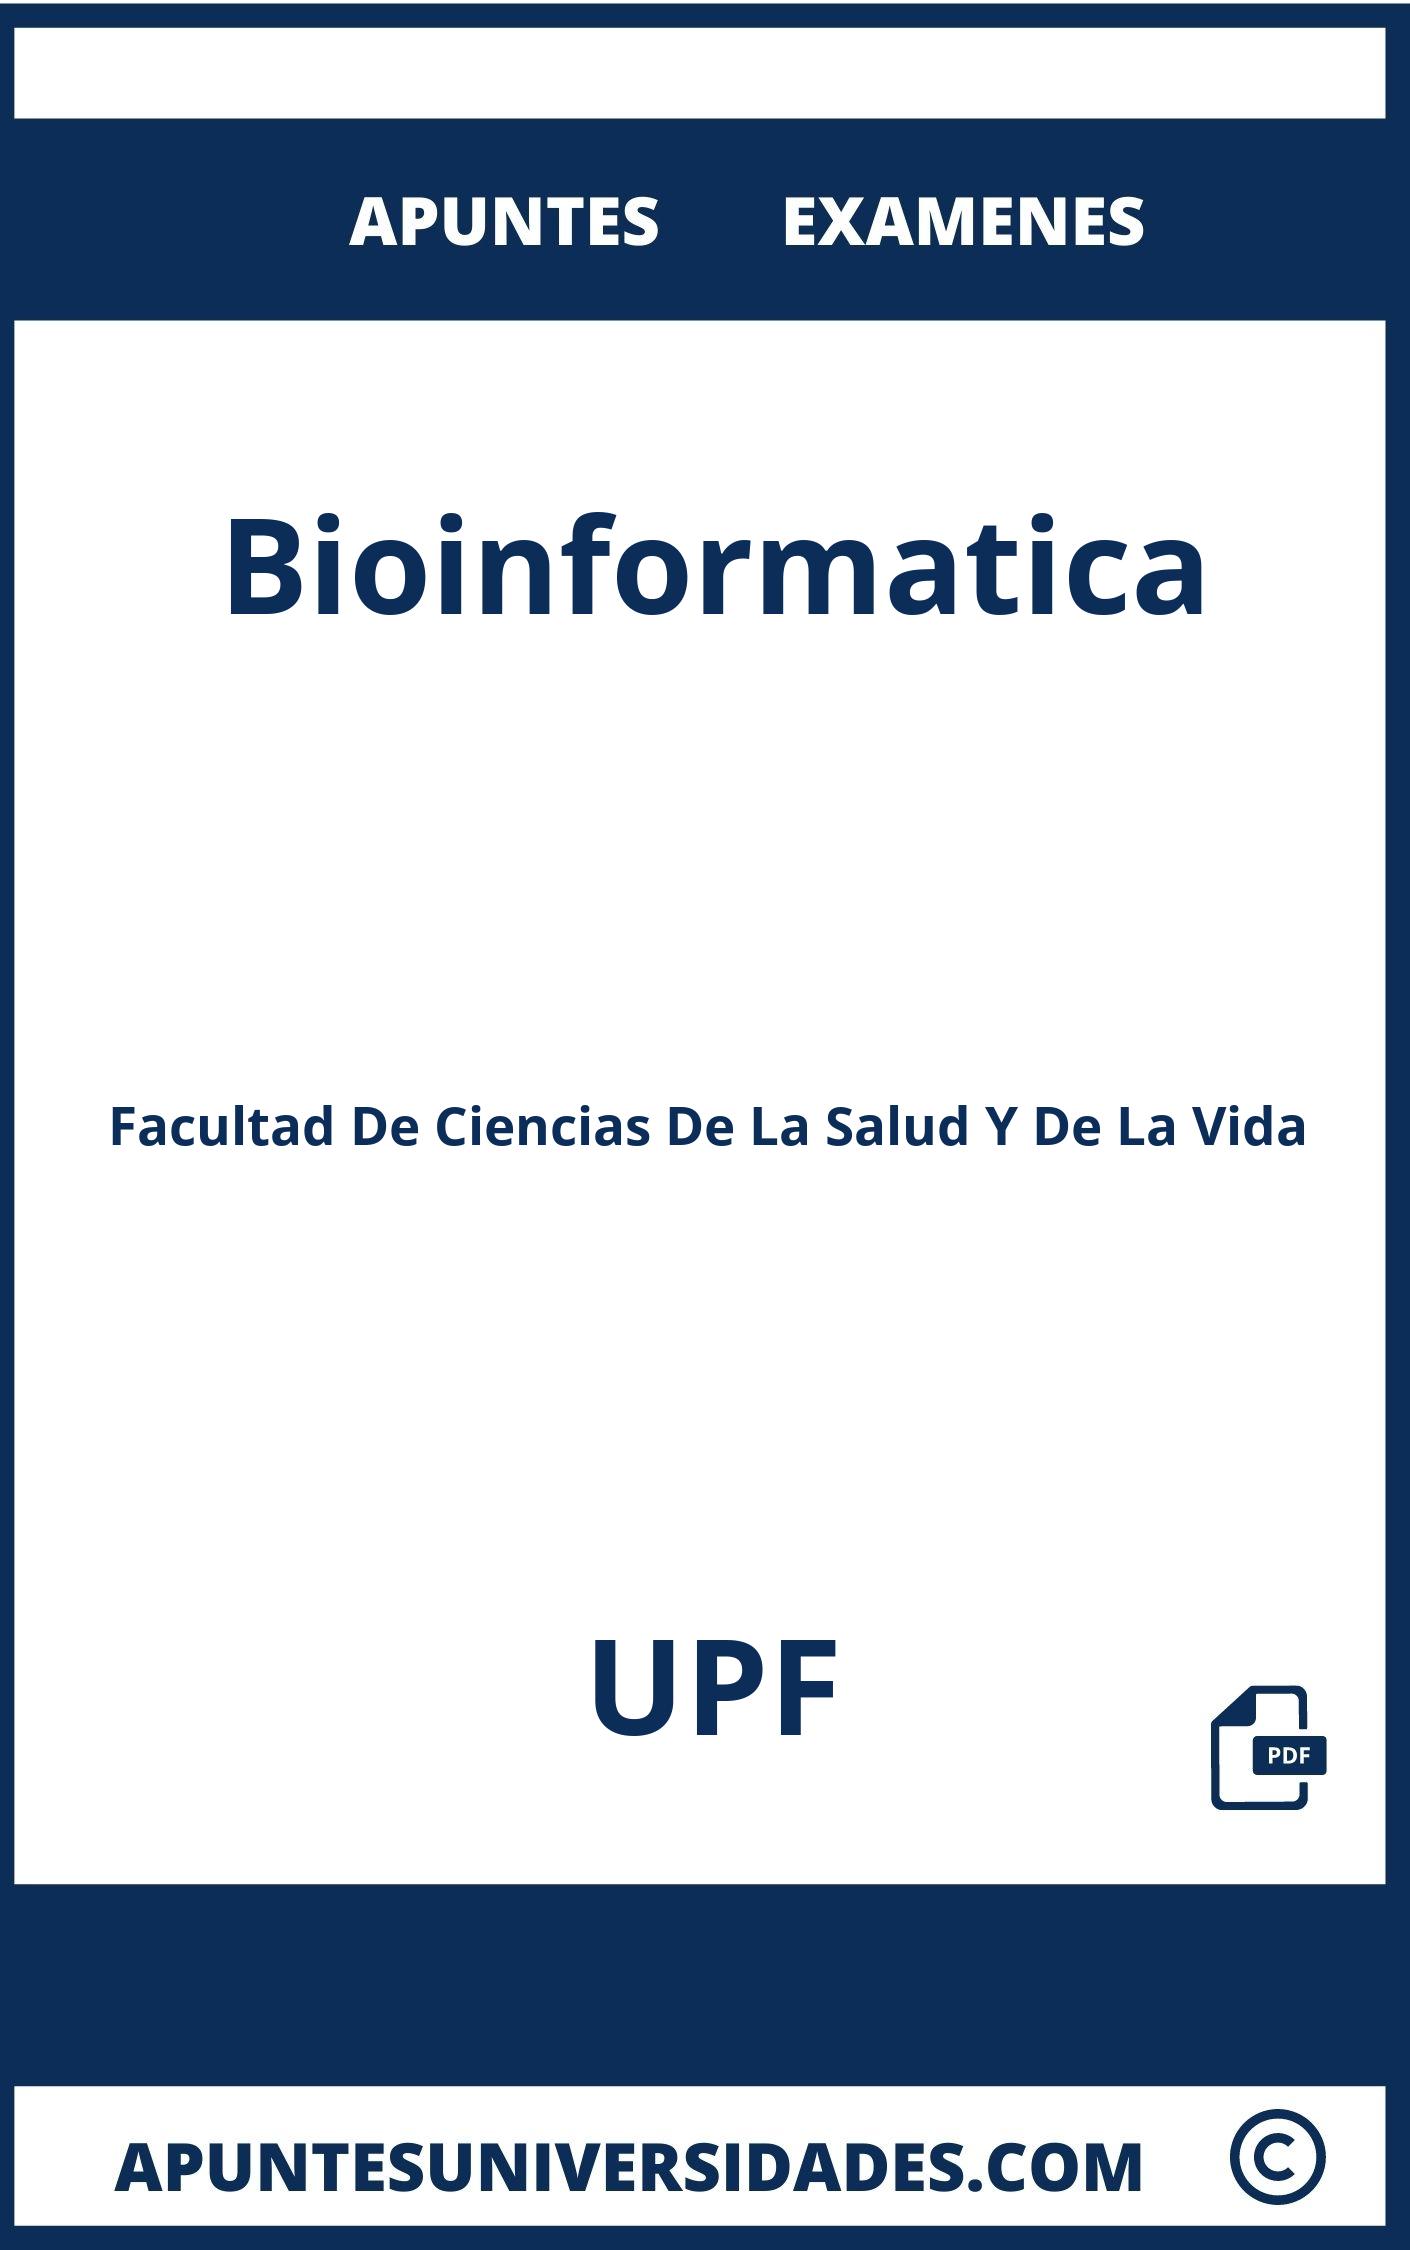 Examenes Apuntes Bioinformatica UPF